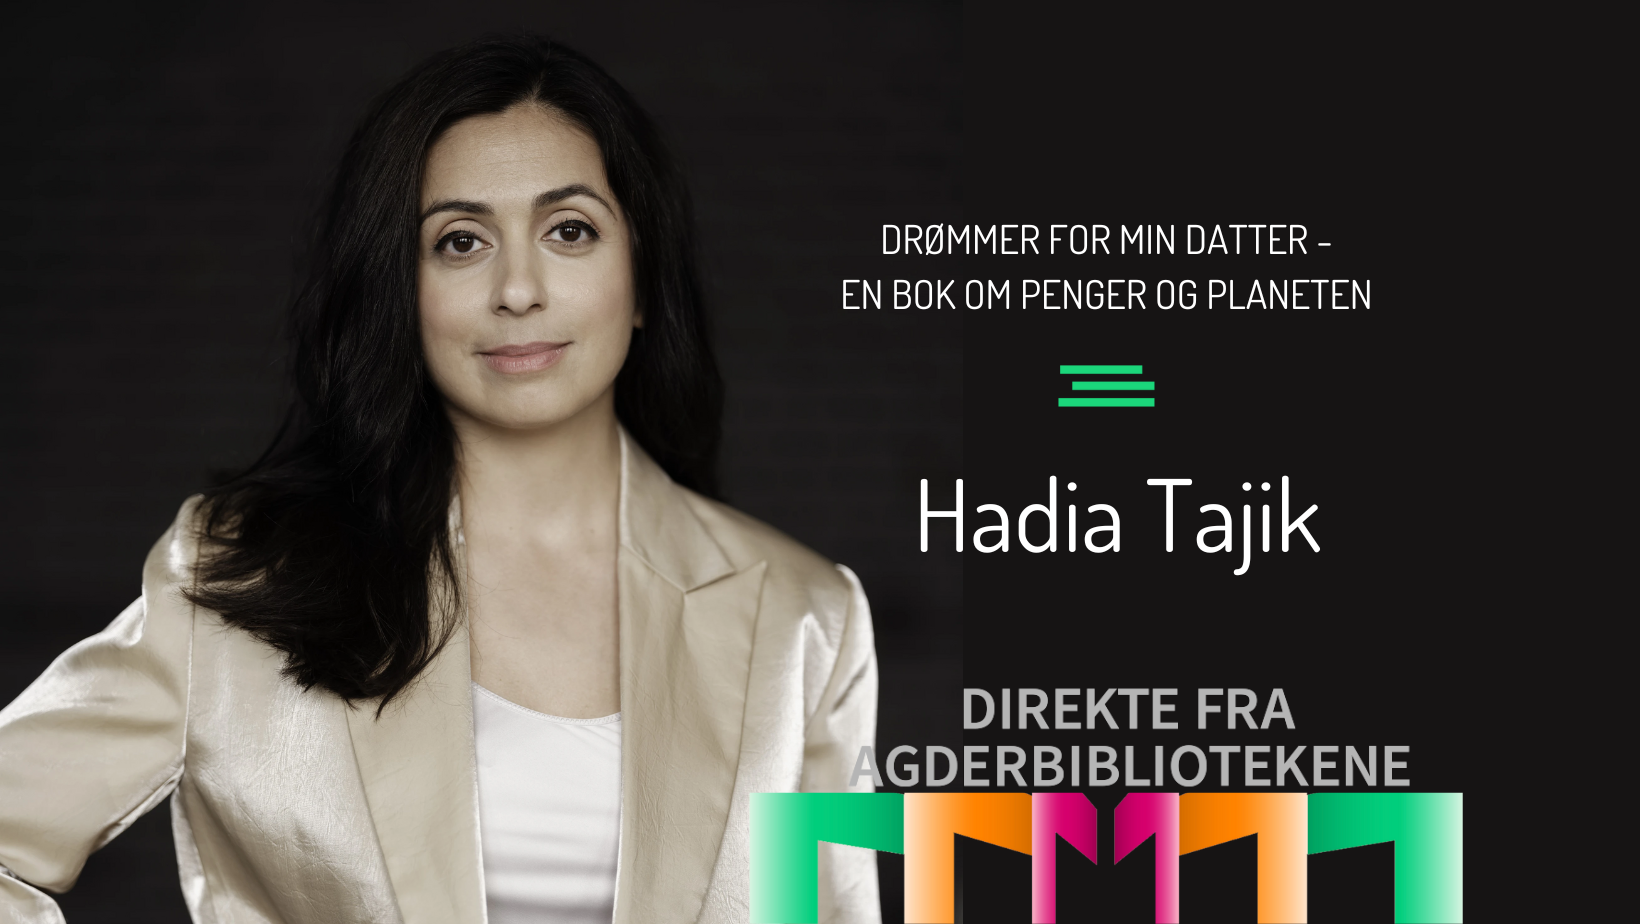 Arrangementsplakat til arrangement med Hadia Tajik.